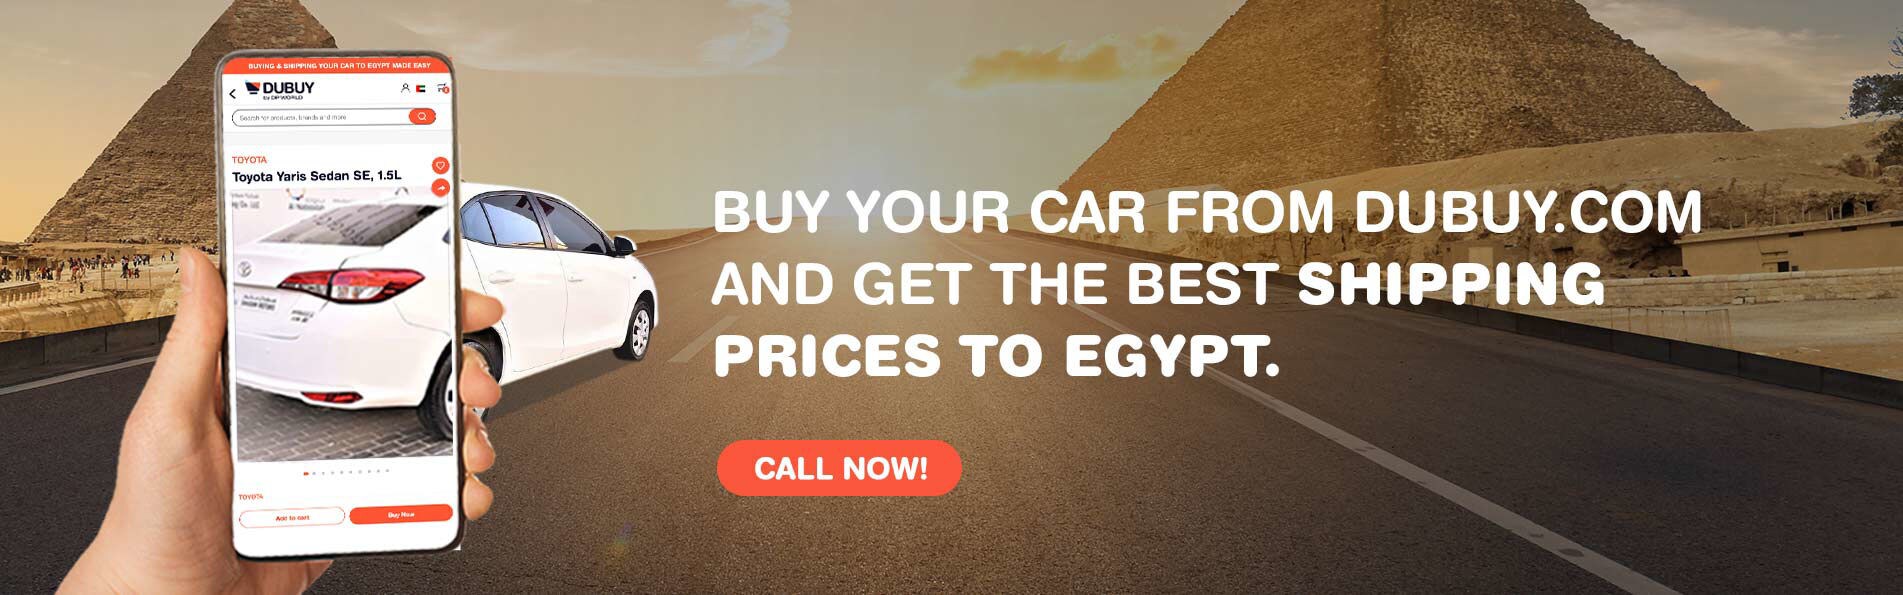 Egypt Car Campaign